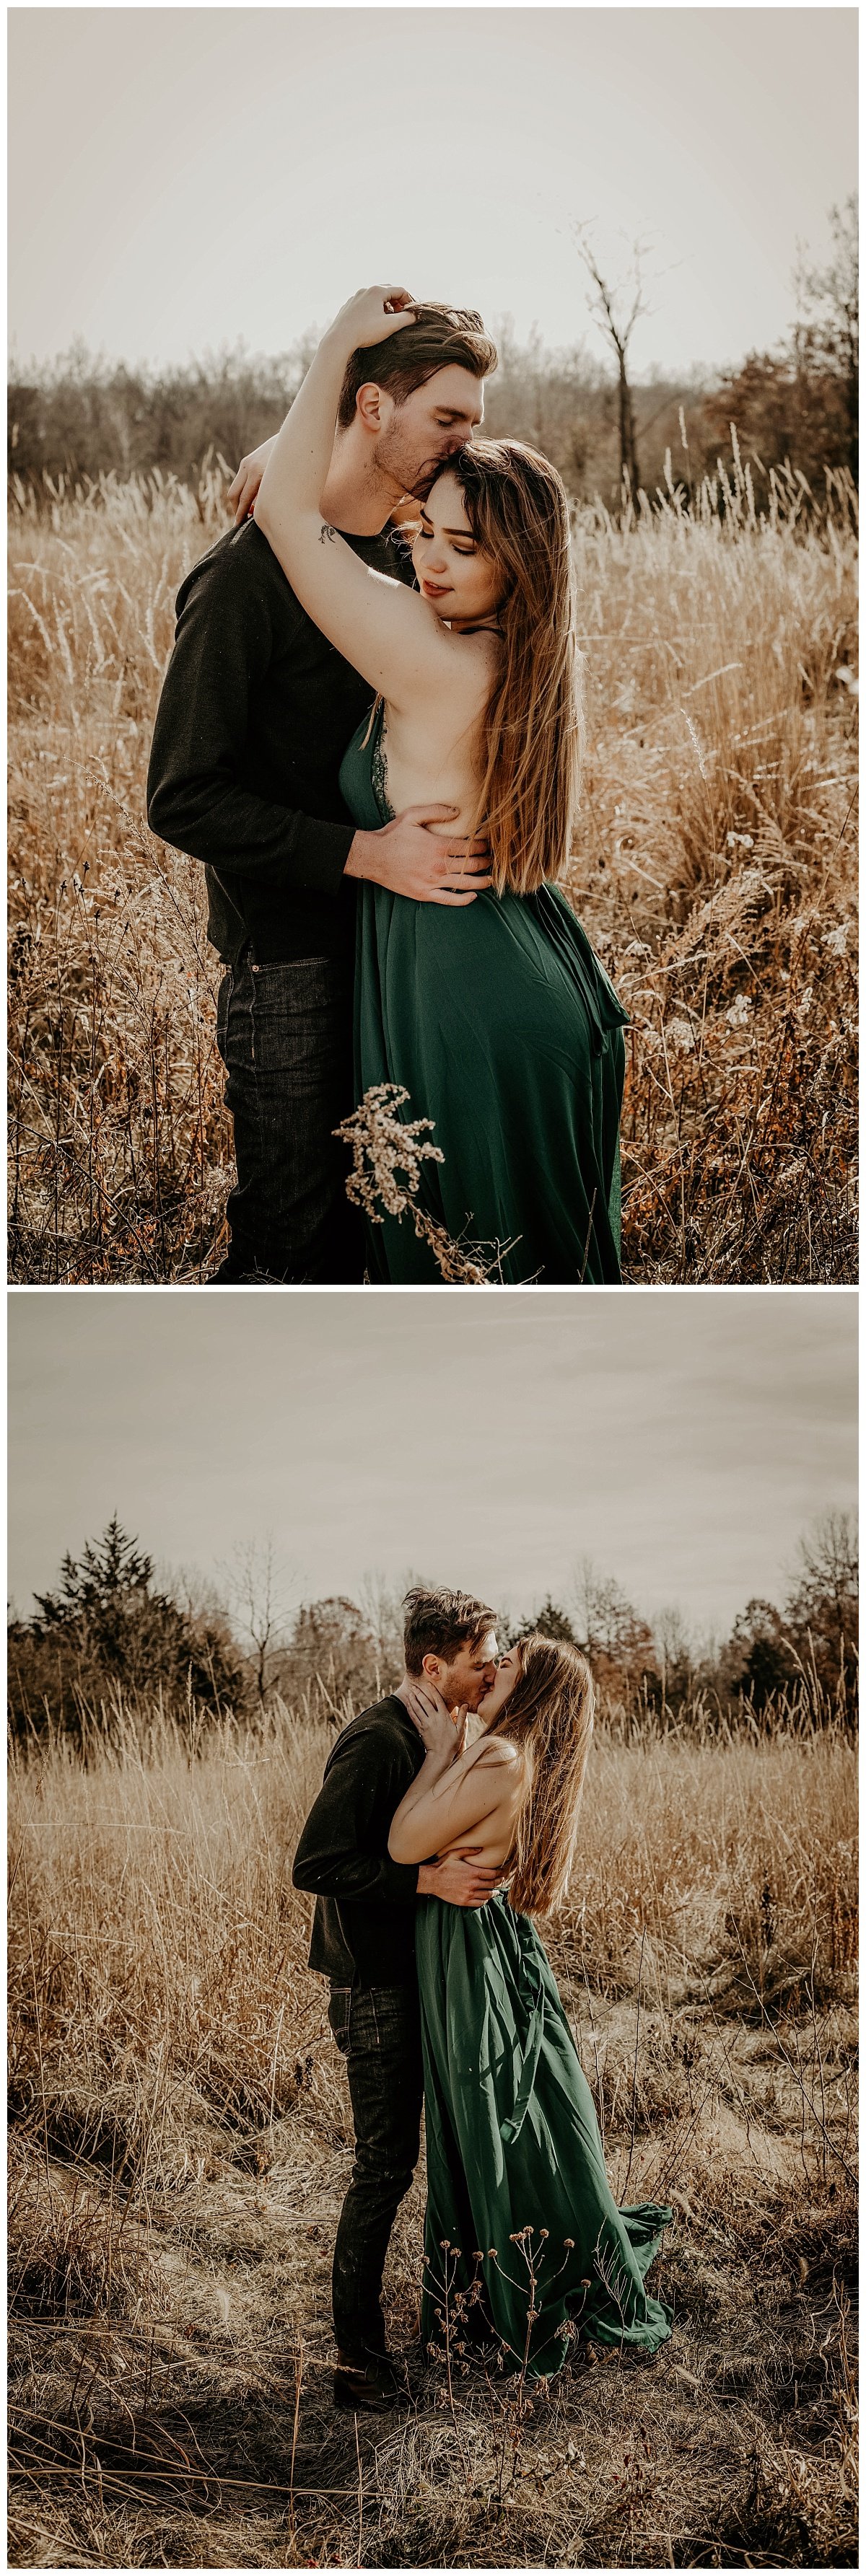 Couples+Adventure+Session+_+Mountain+Couples+Photos+_+Kansas+City+Engagement+Photography+Kansas+City+Wedding+Photography (6).jpeg